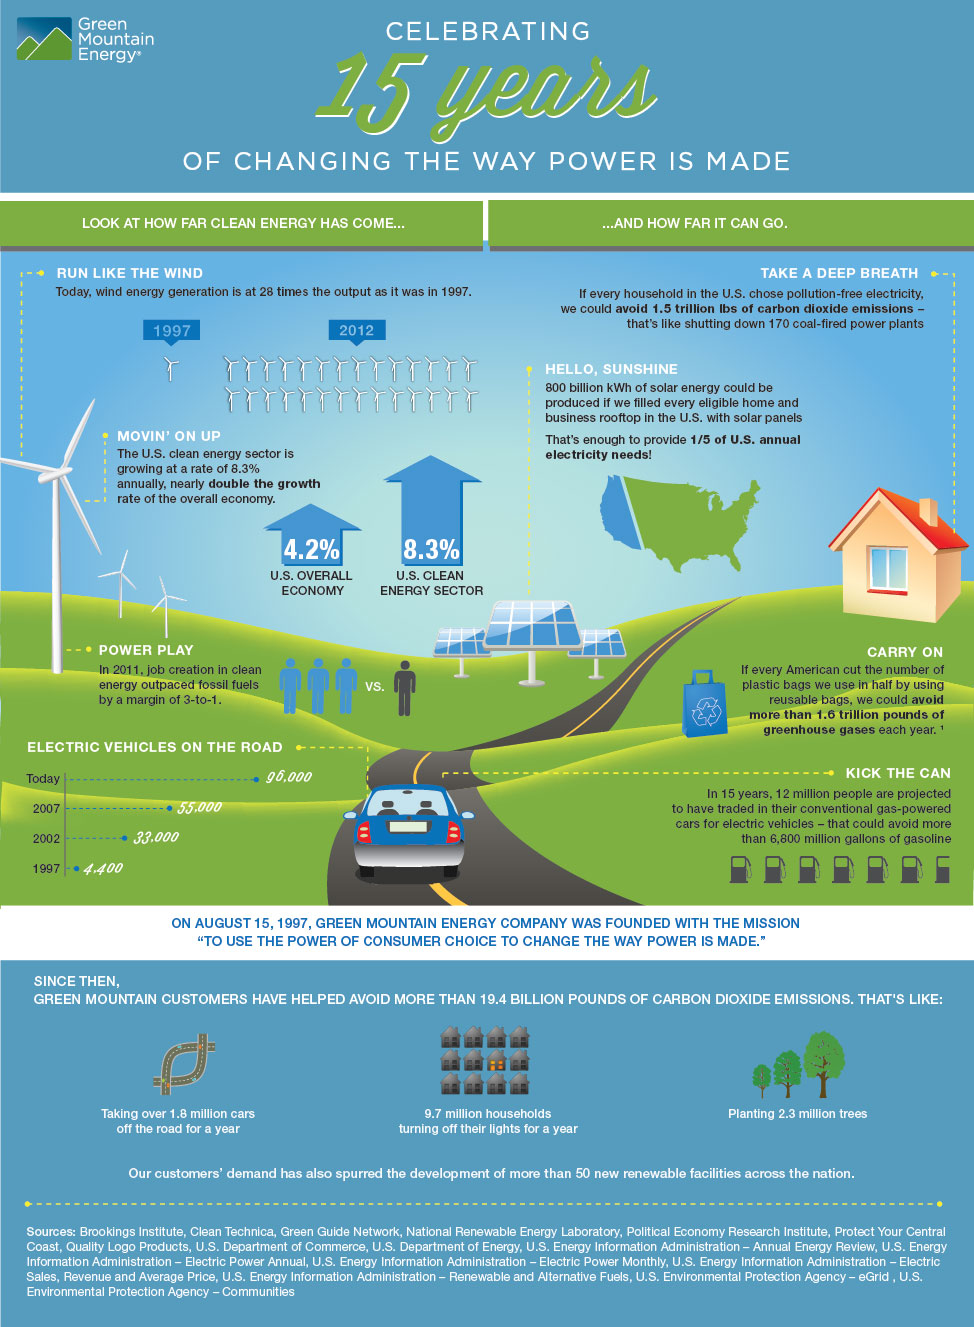 Geen-Mountain-Energy-15th-Birthday-Infographic-3.jpg